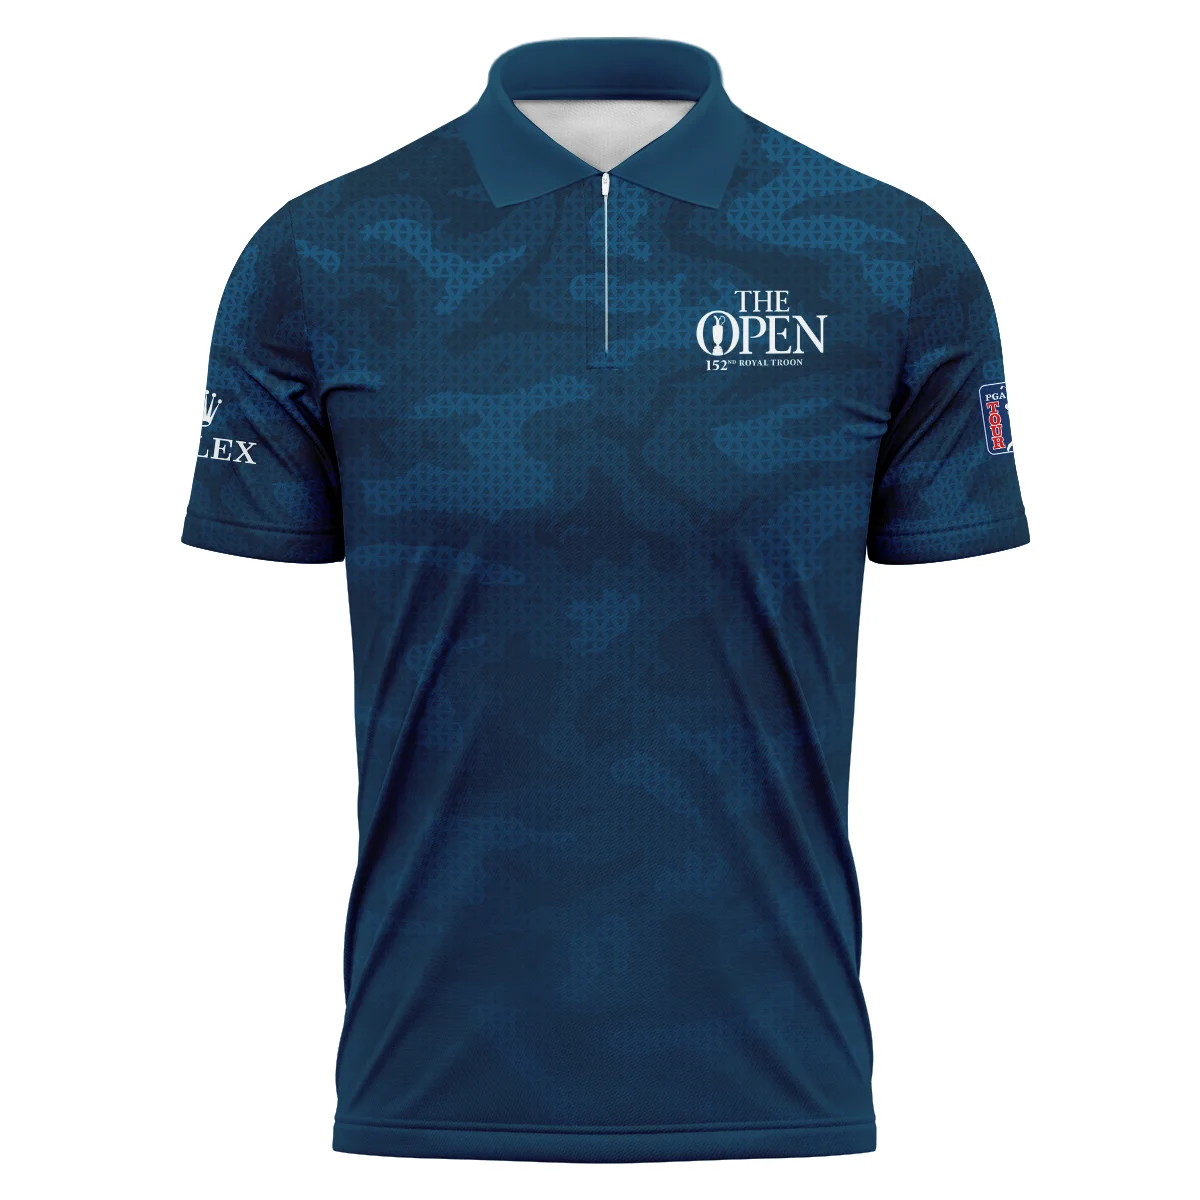 Rolex 152nd Open Championship Dark Blue Abstract Background Zipper Hoodie Shirt All Over Prints HOTOP260624A02ROXZHD